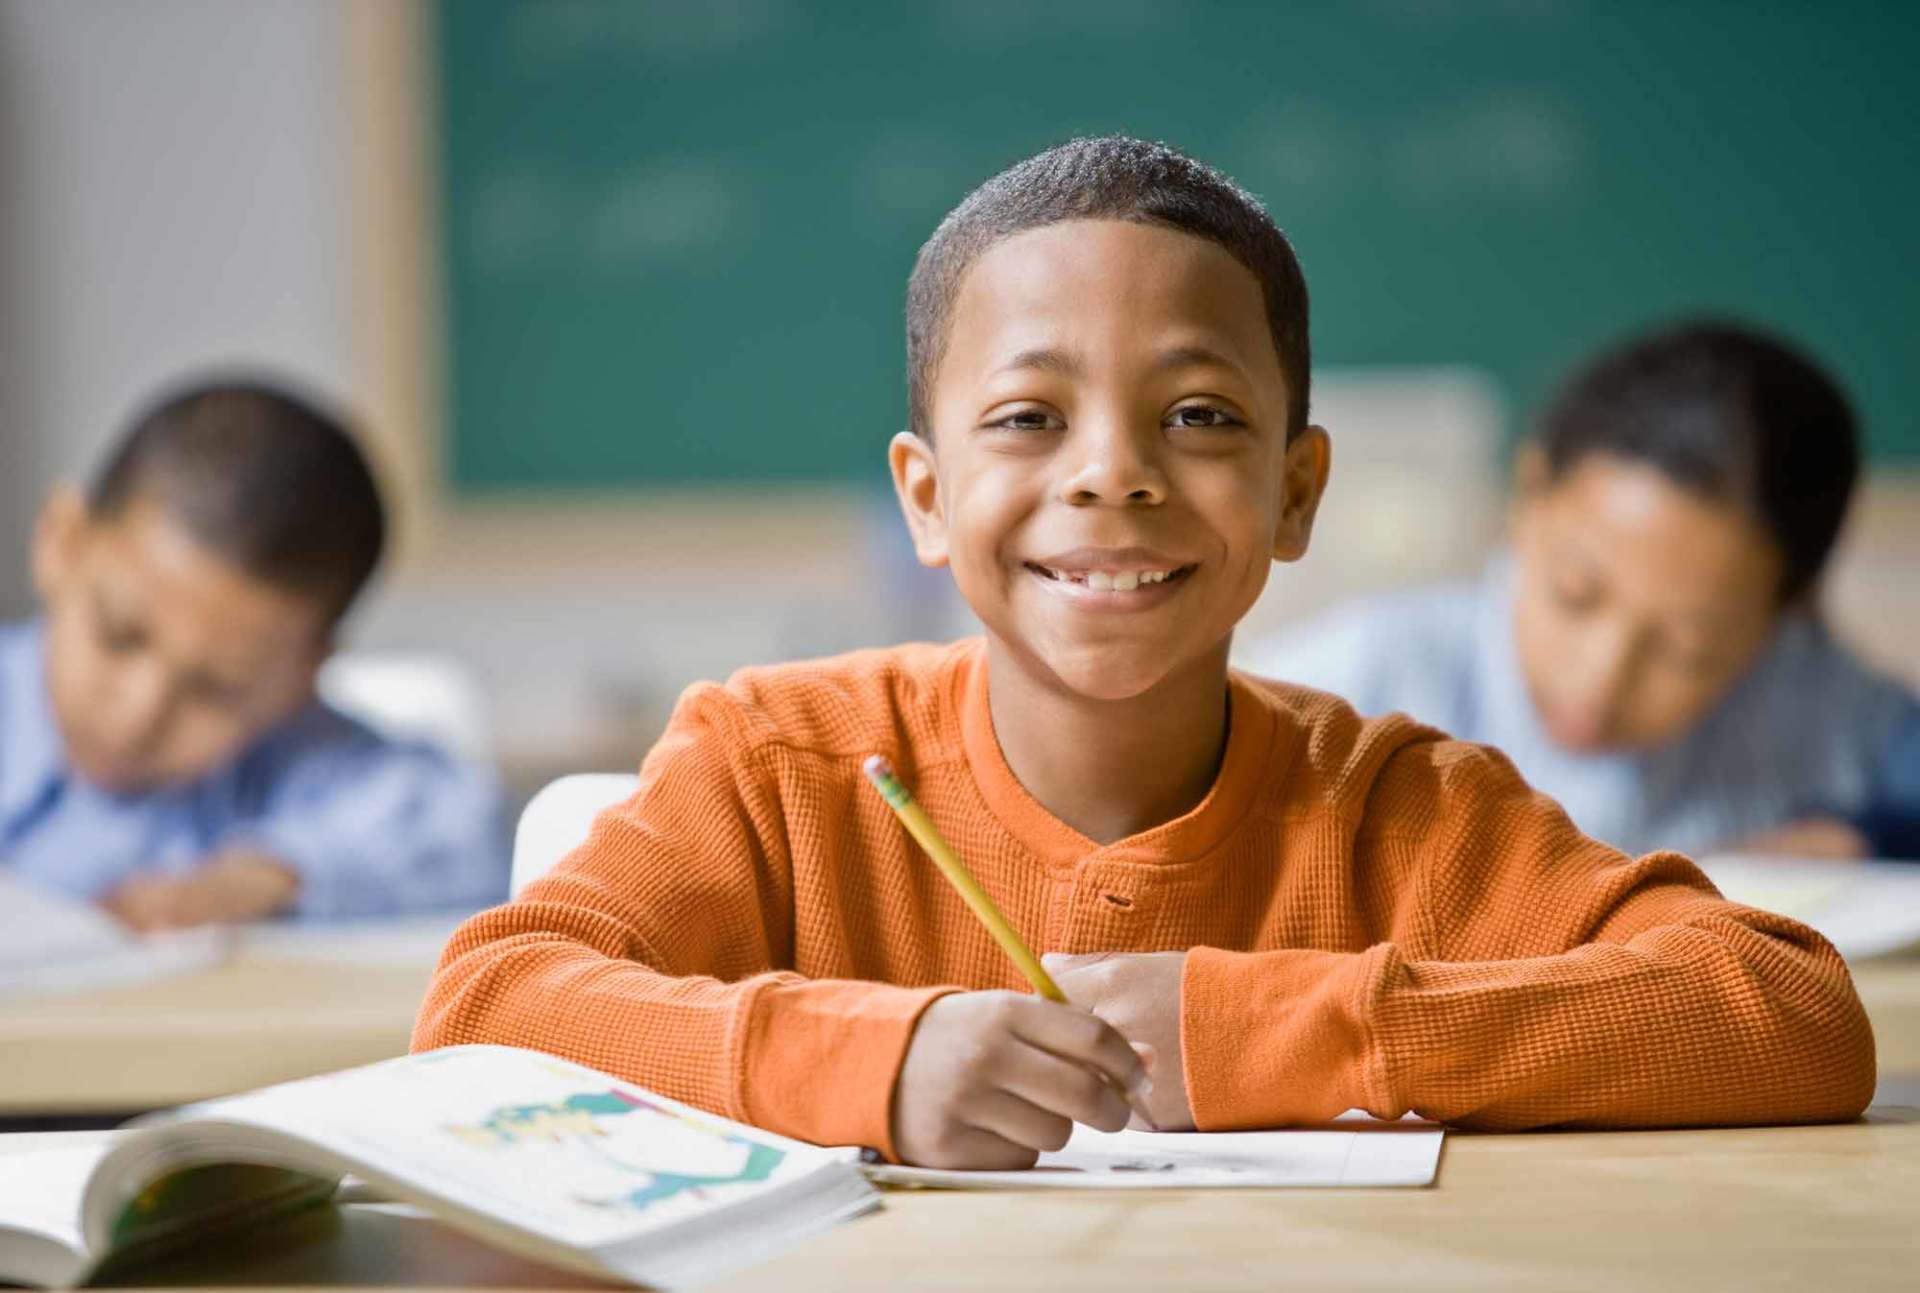 Mixed Race boy writing at school desk